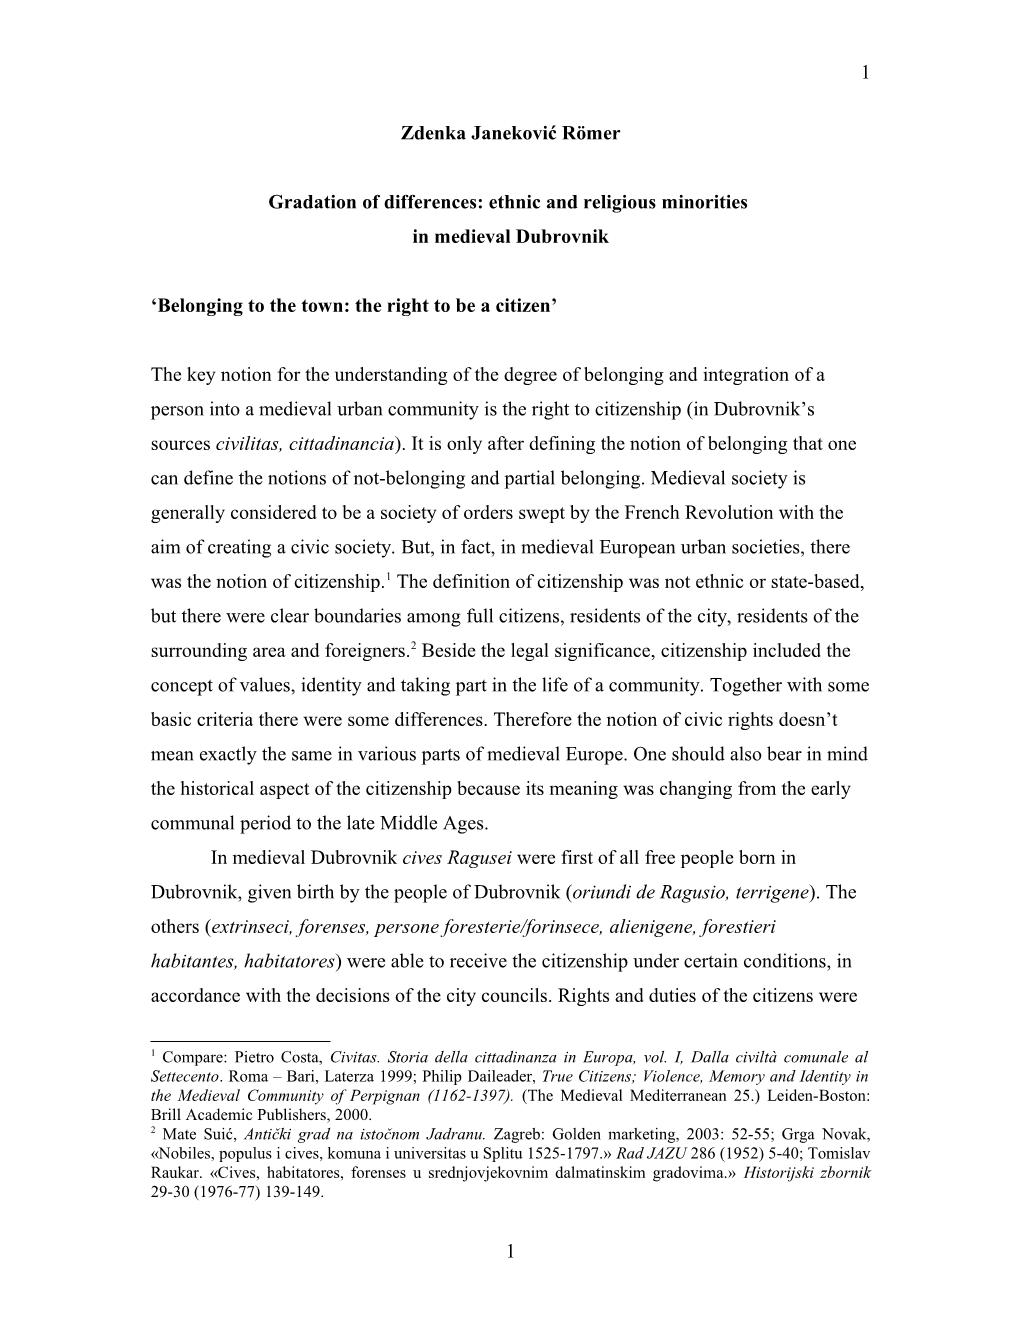 Gradation of Differences: Ethnic and Religious Minorities